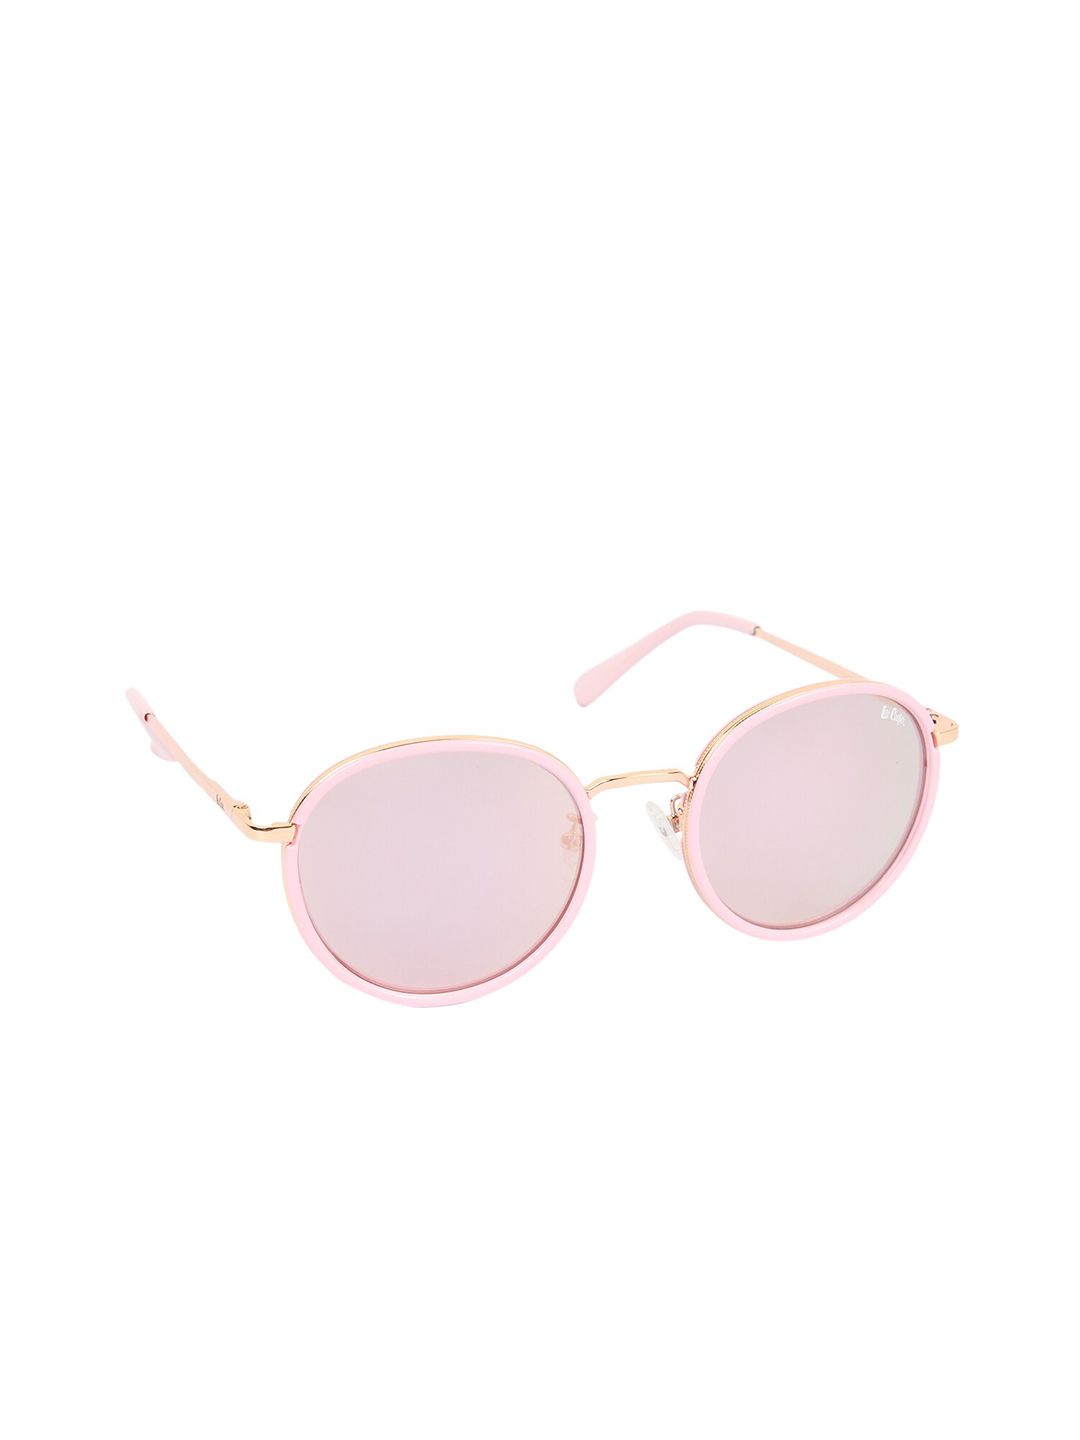 Lee Cooper Women's Pink Sunglasses Price in India